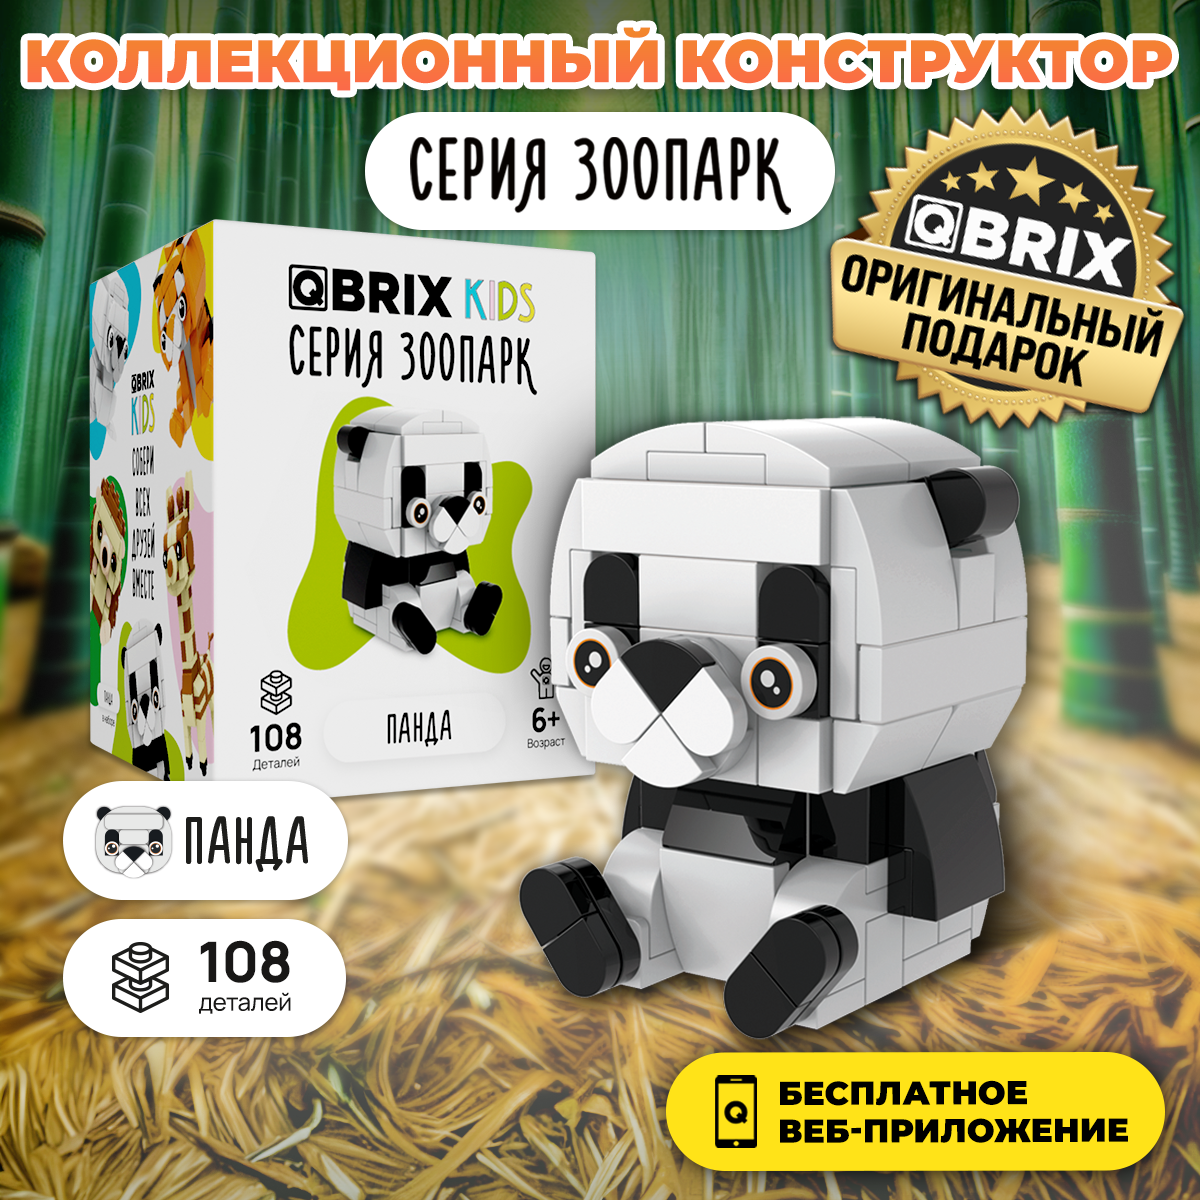 Конструктор QBRIX KIDS Панда игрушка